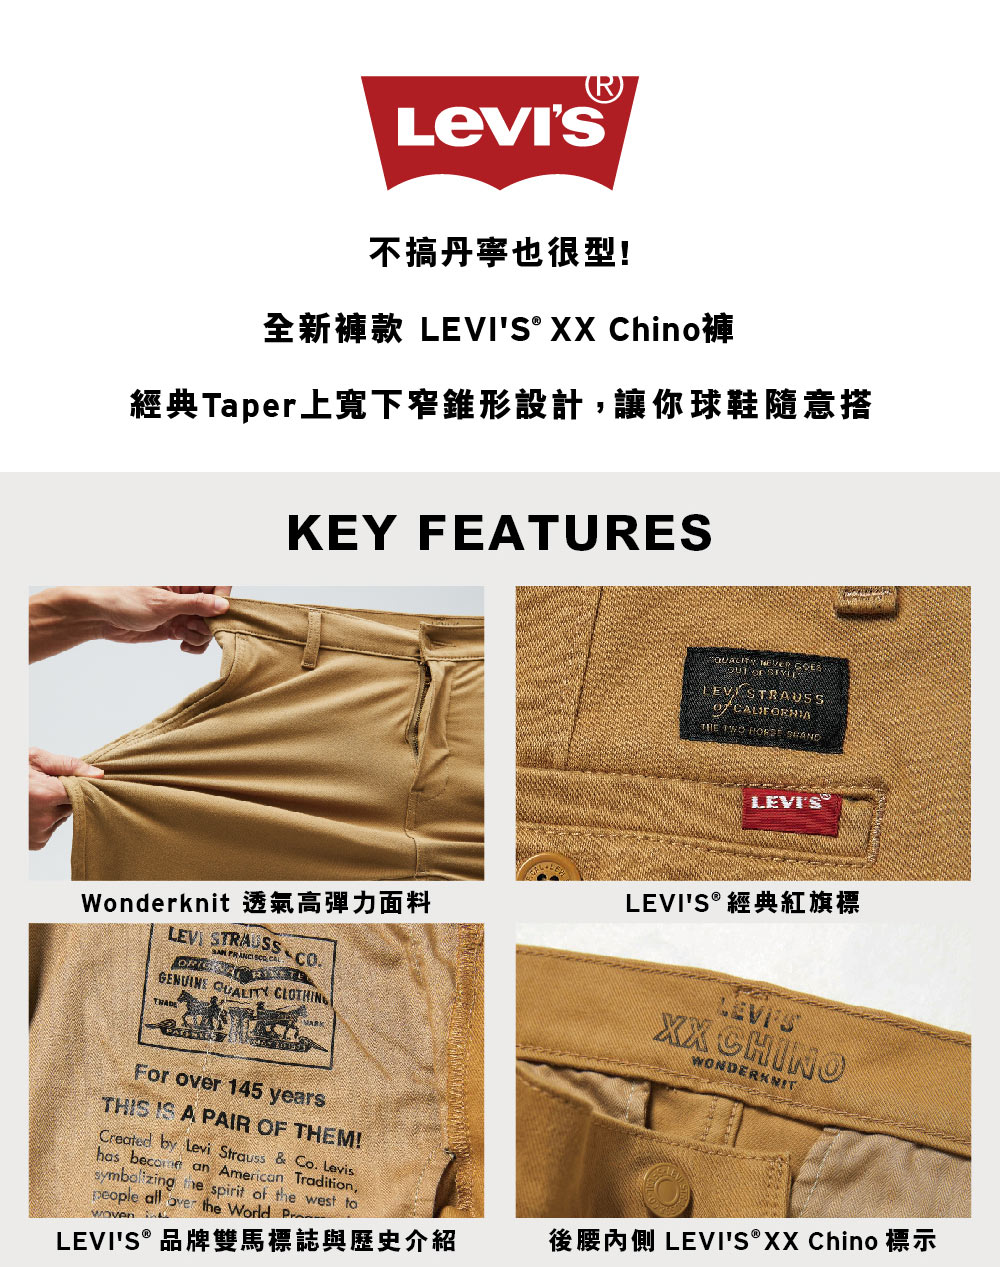 LEVIS 男款 Chino工作休閒褲 / 後袋蓋摩登設計 